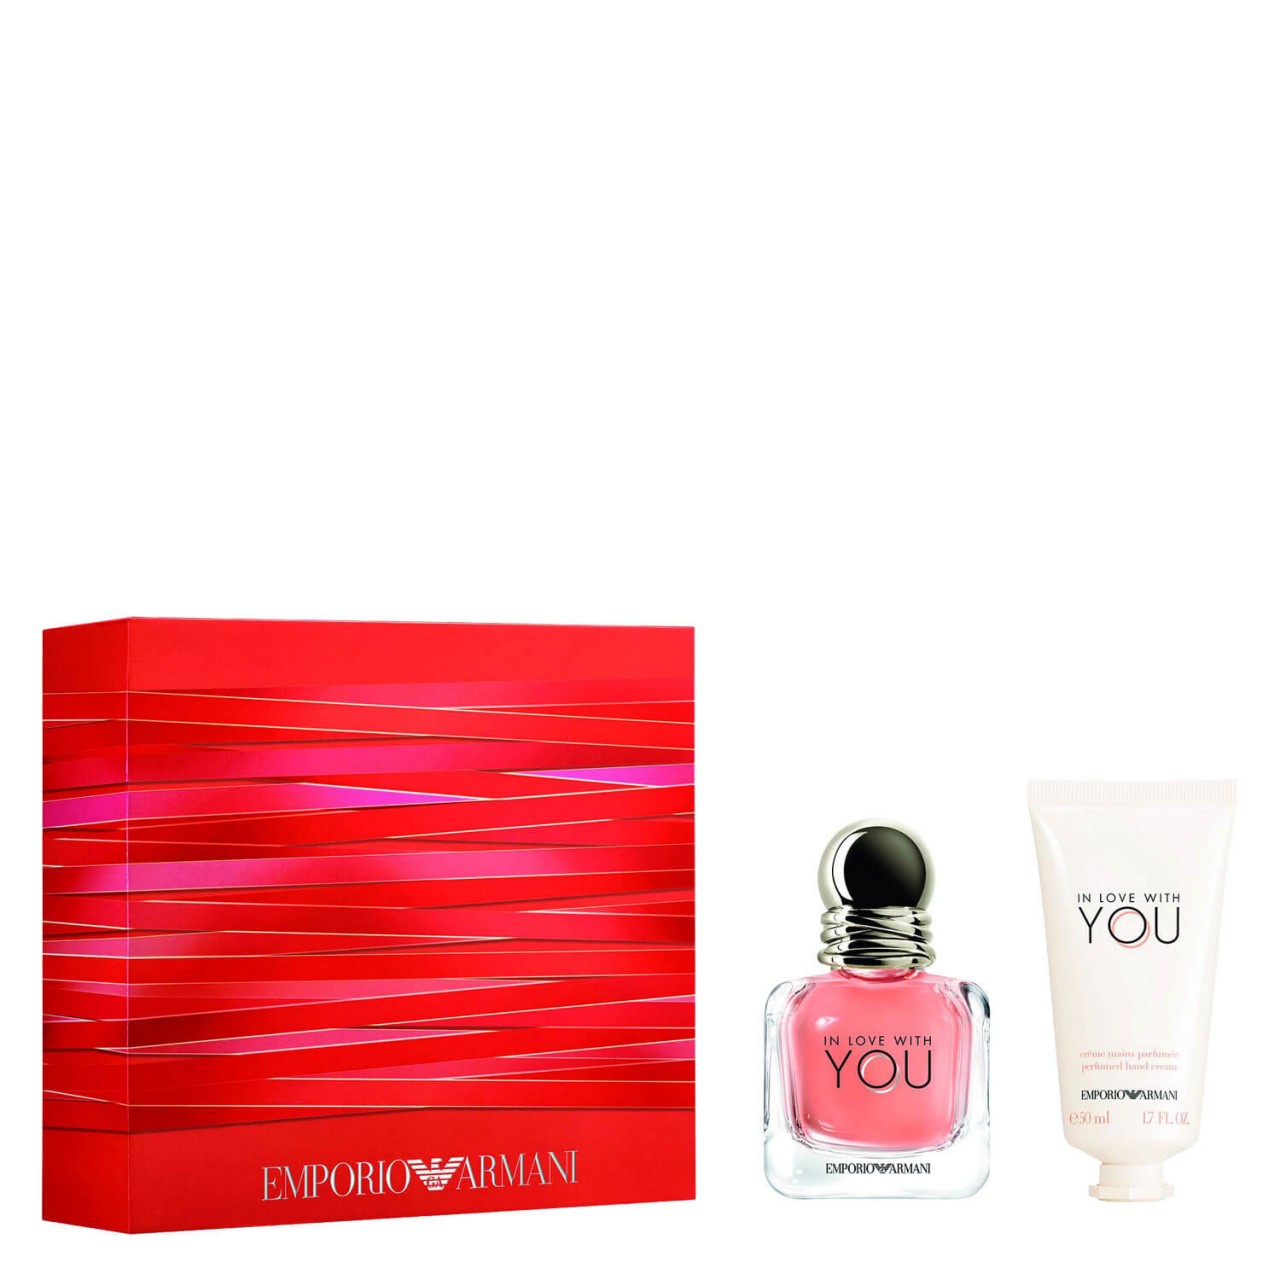 Emporio Armani - In Love With You Eau de Parfum Kit von Giorgio Armani